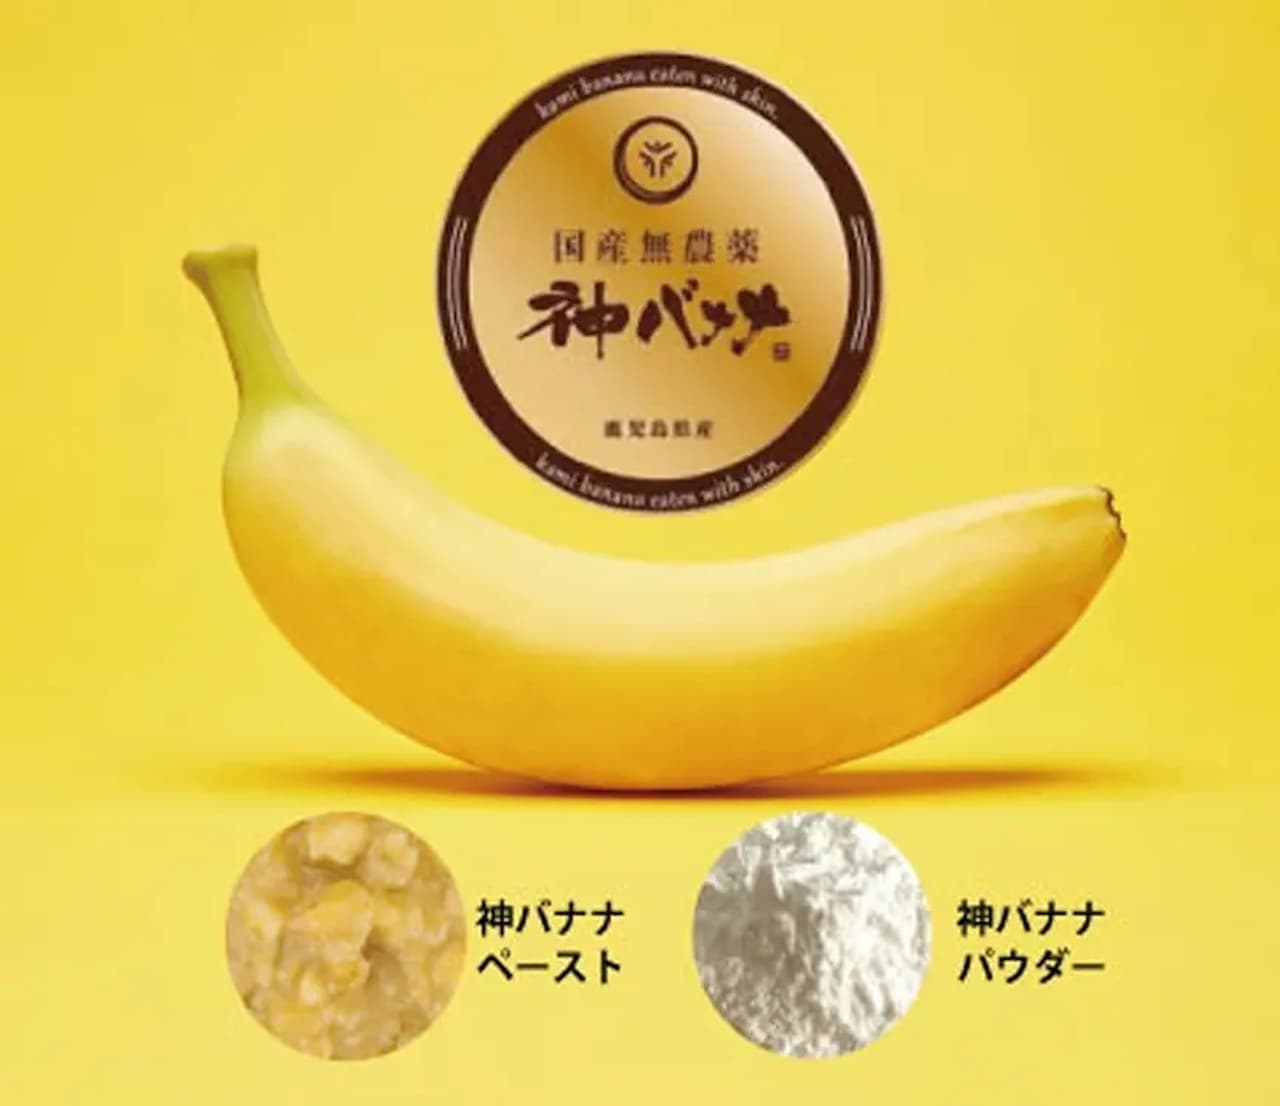 Kami Banana Paste" "Kami Banana Powder" Whole Japanese bananas